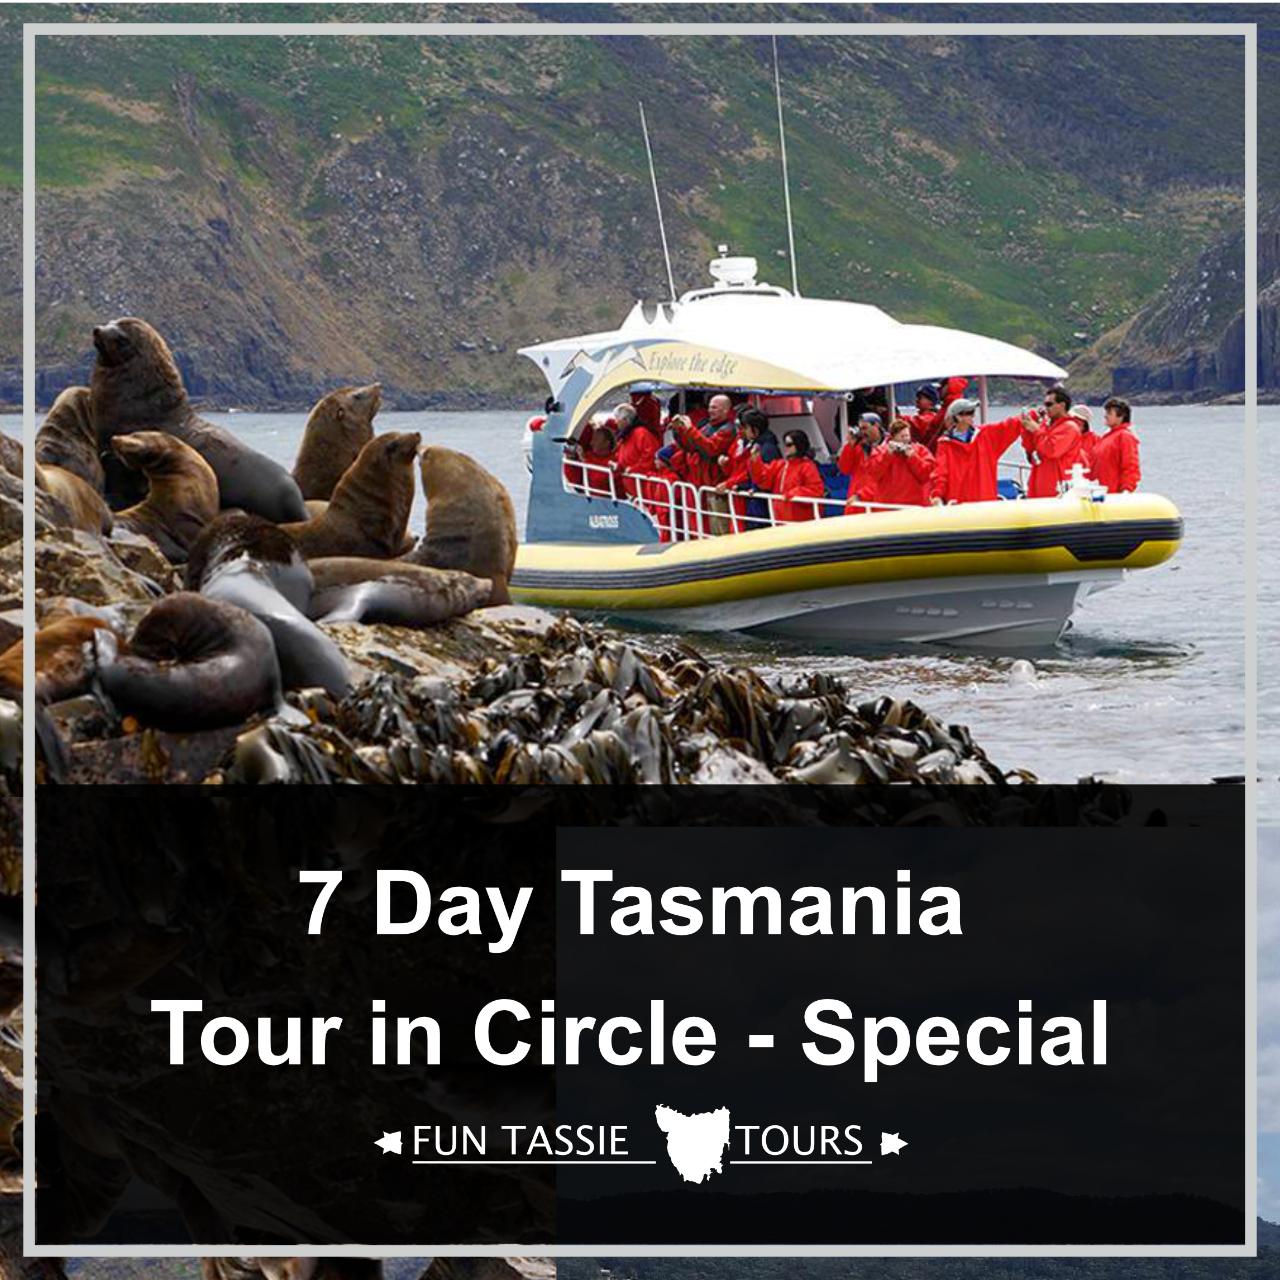 7 Day Tasmania Tour In Circle - Special